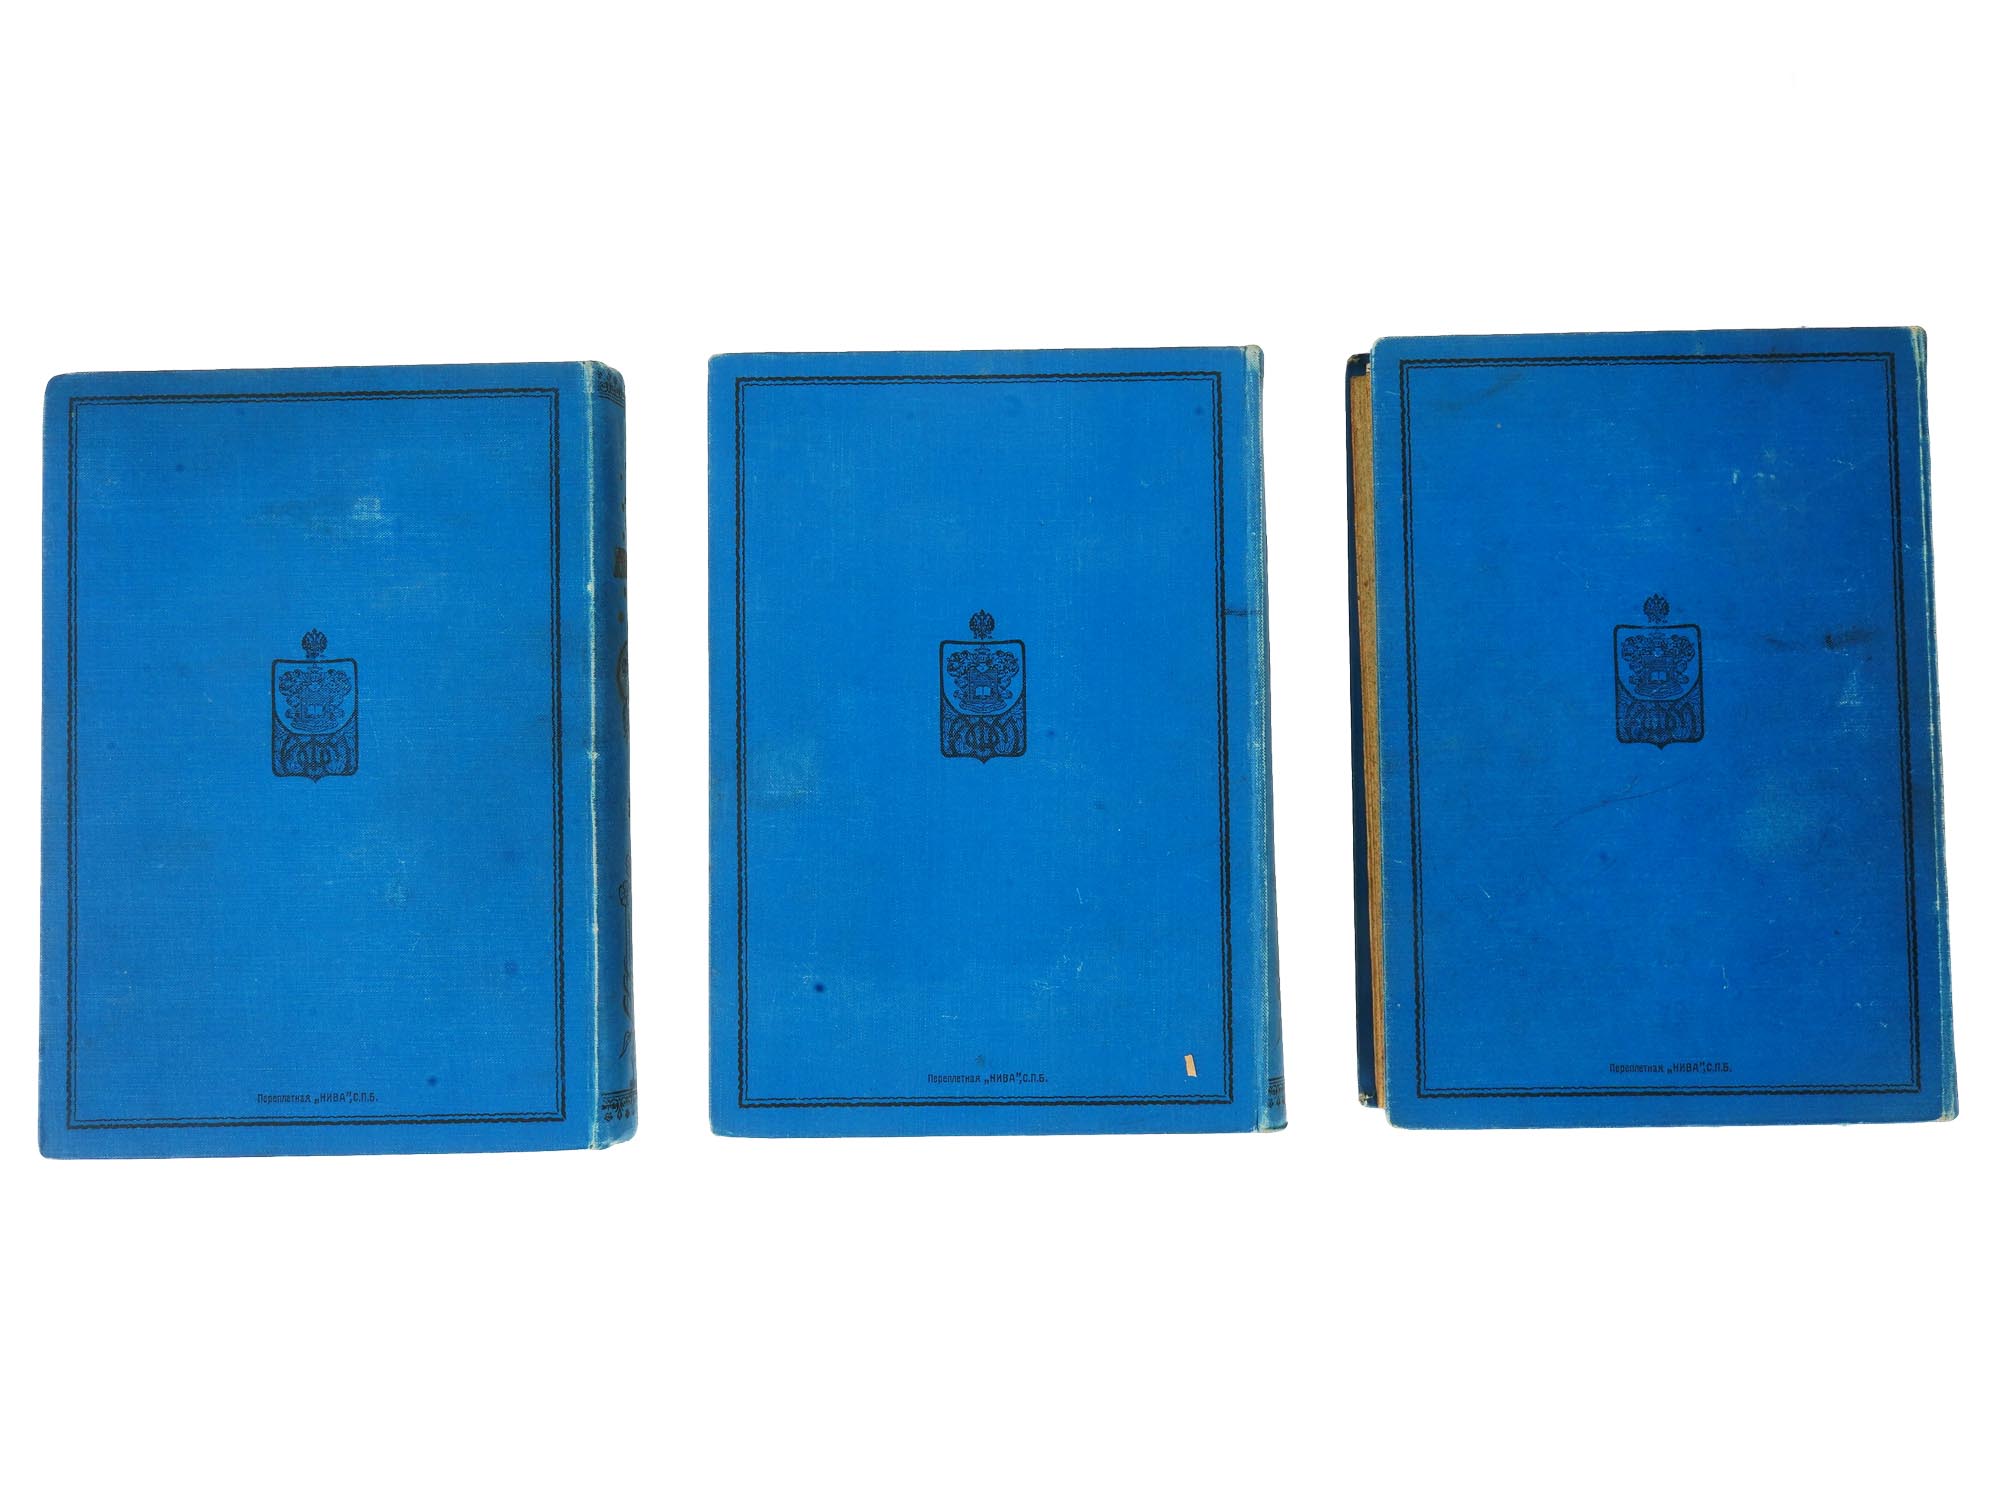 RUSSIAN BOOKS V ZHUKOVSKY COMPLETE WORKS 1902 PIC-1